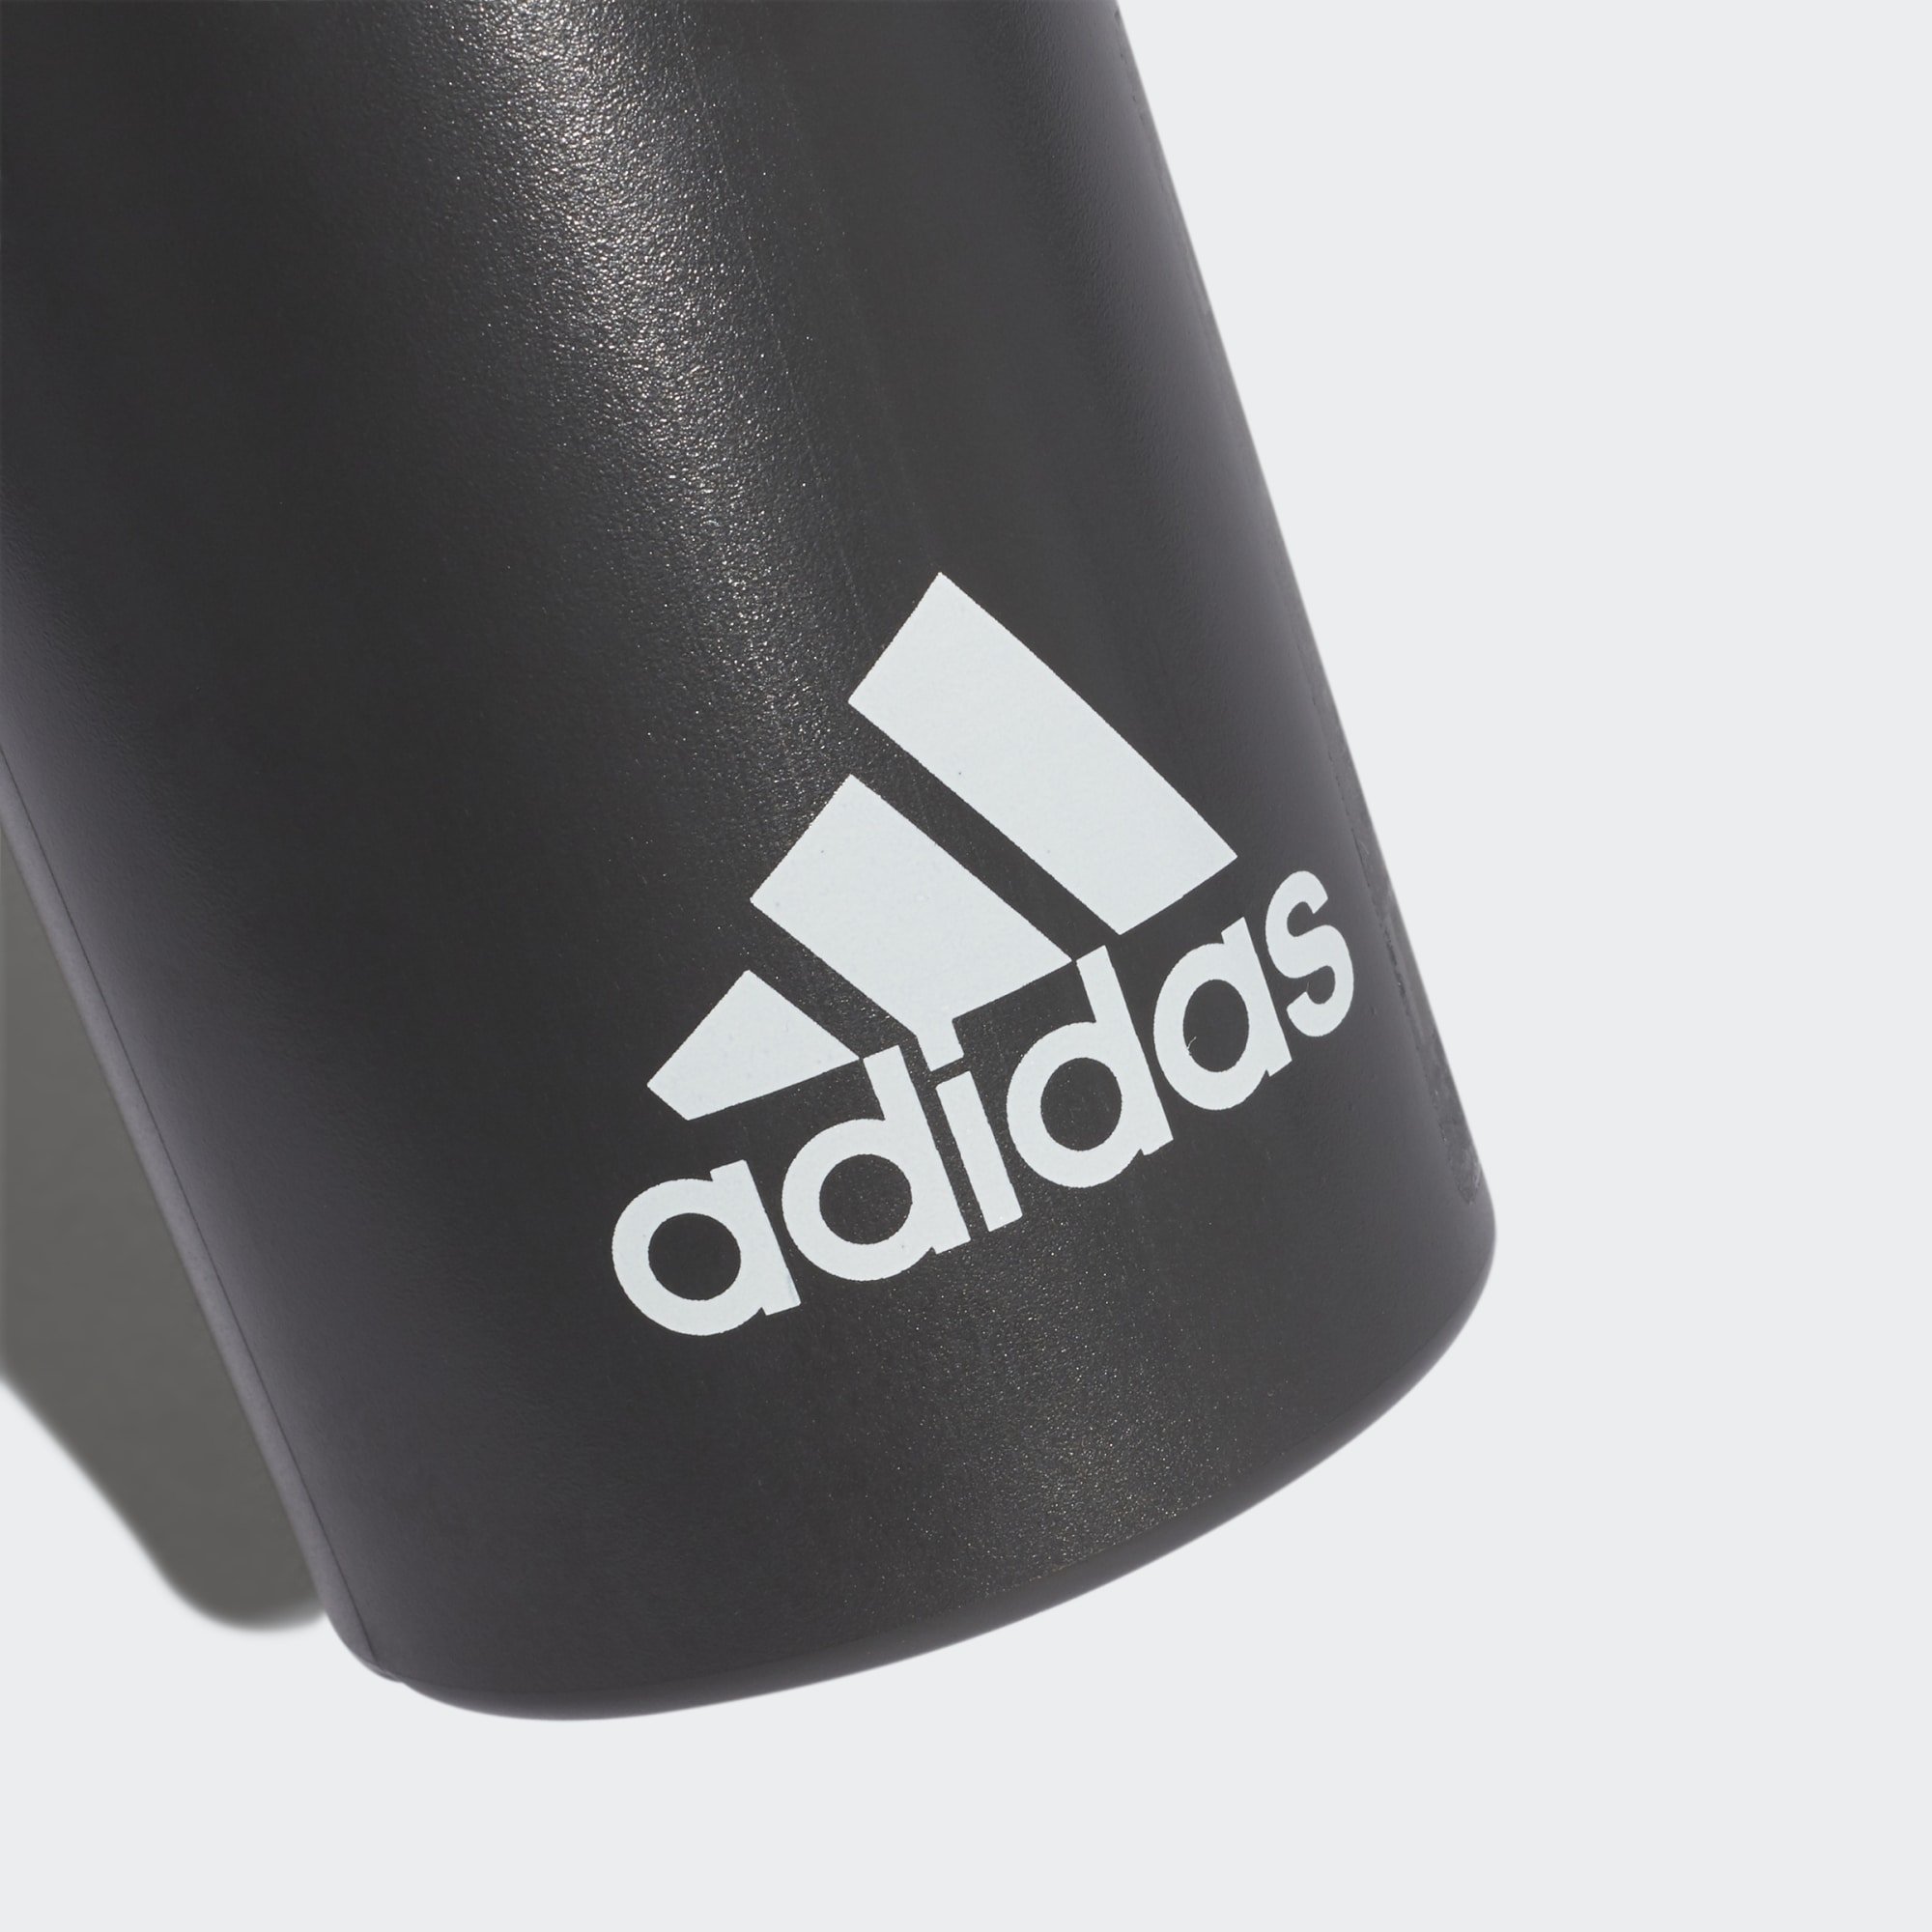 Squeeze Performance Adidas;:Transparente/Único/Unissex - 3